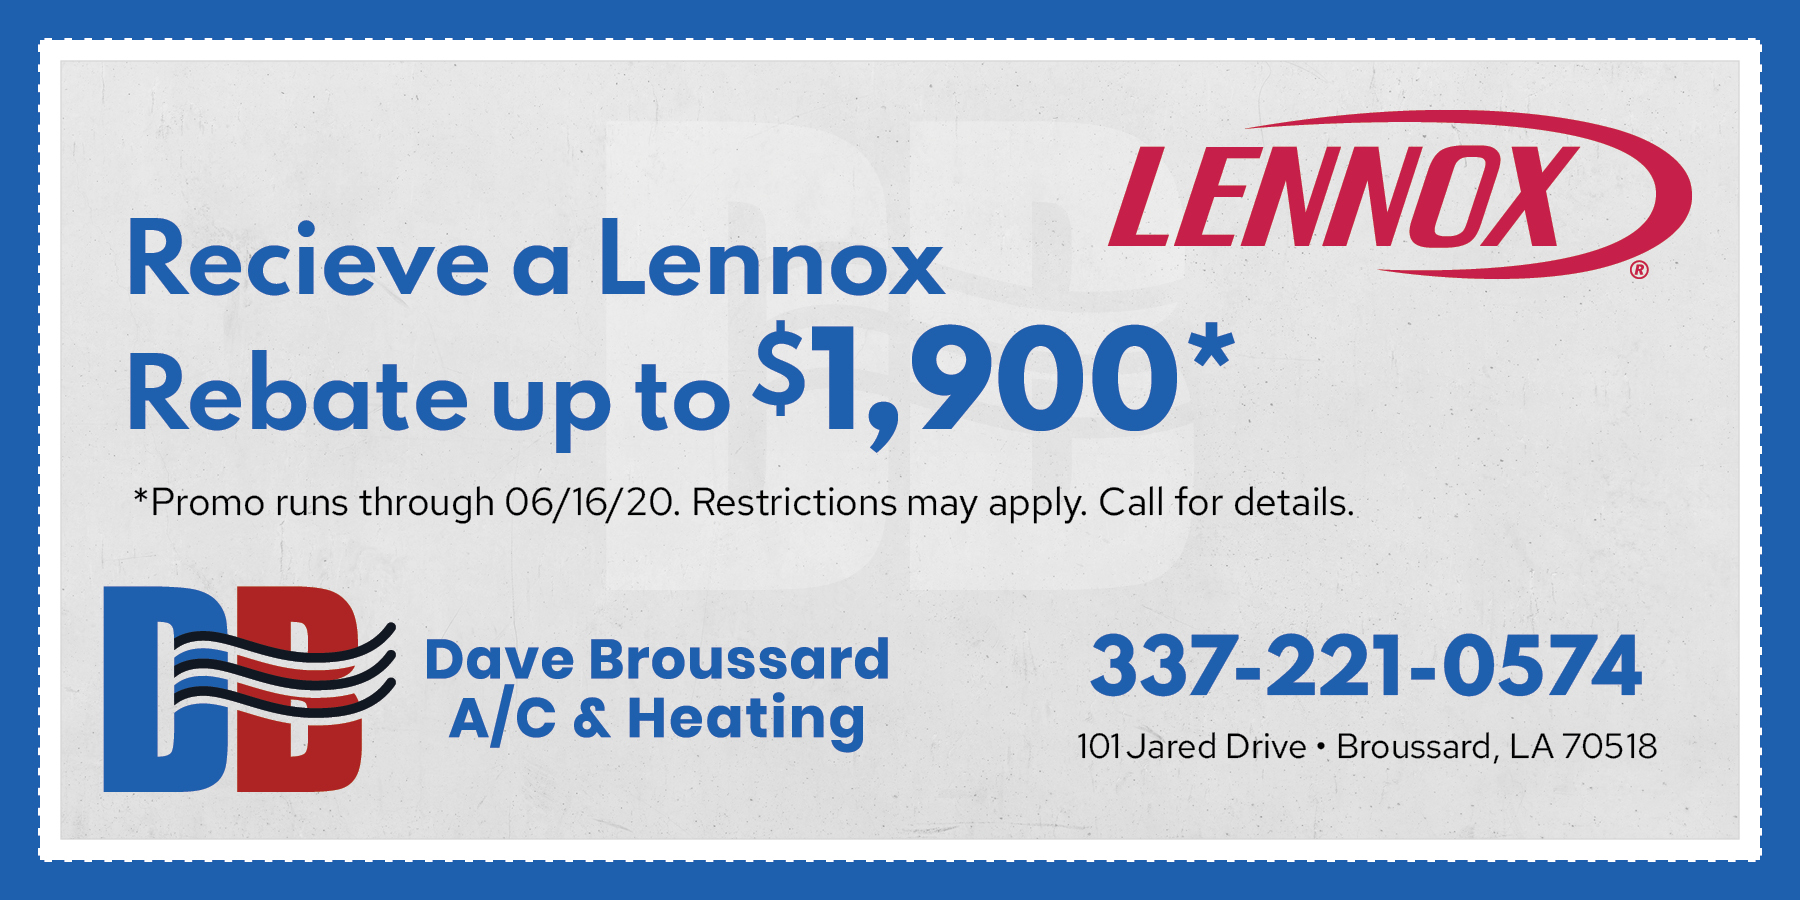 Receive lennox rebates of up to $1,900.